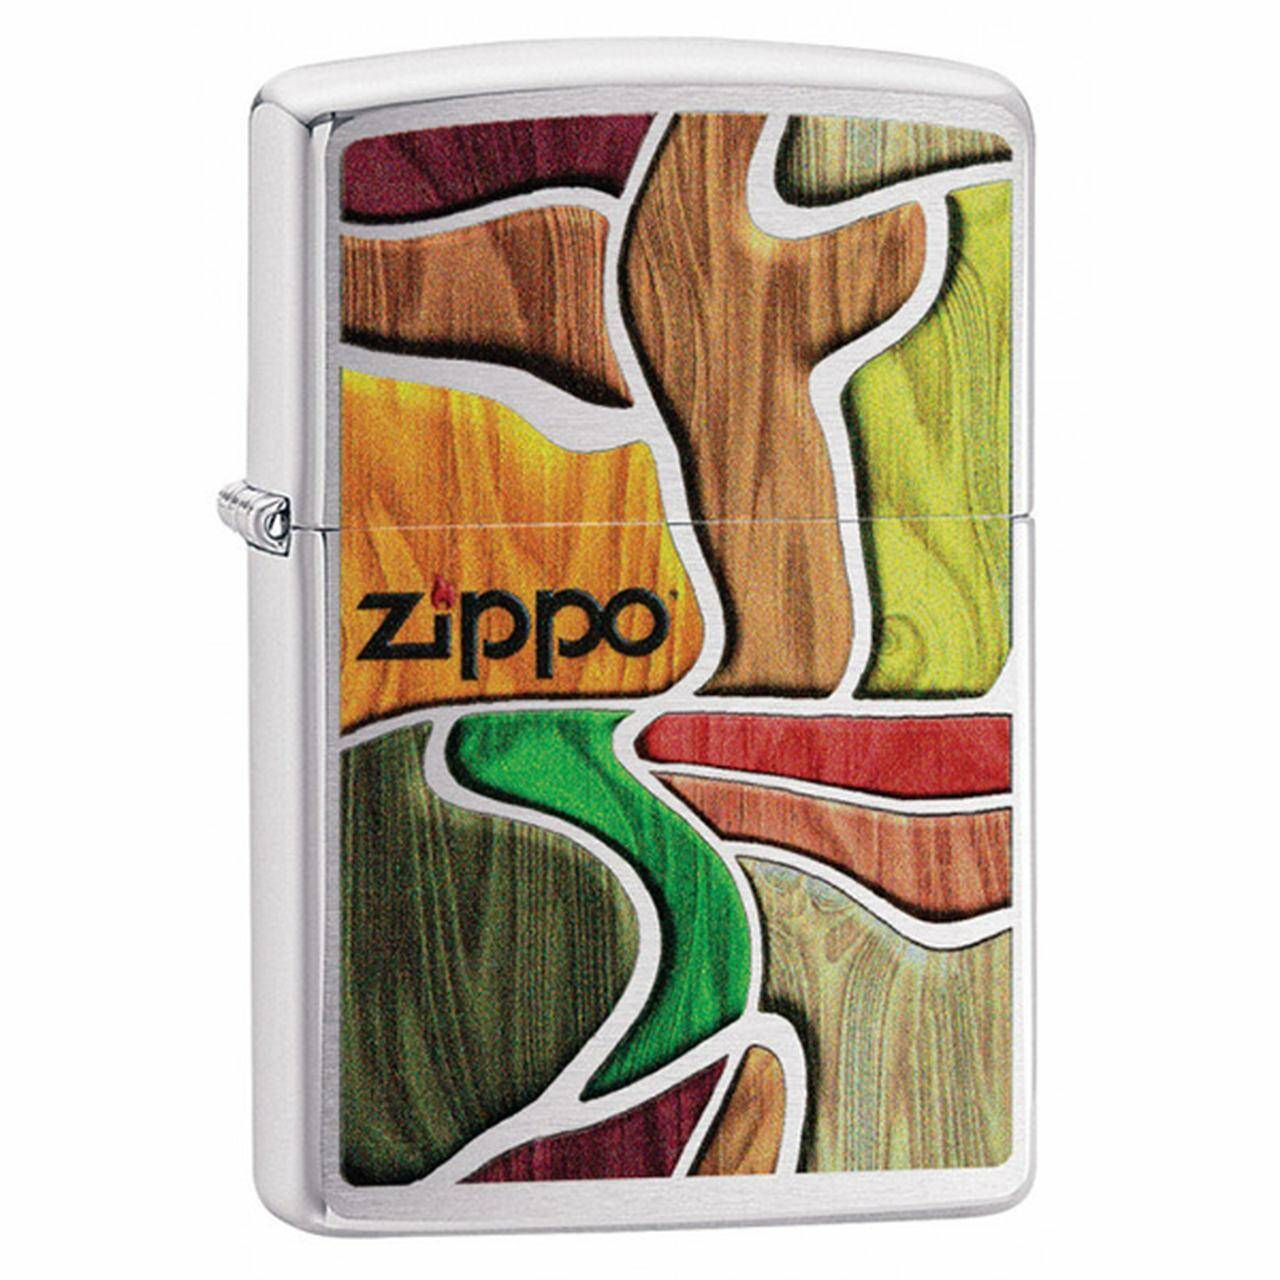 ZIPPO - COLORFUL WOOD DESIGN